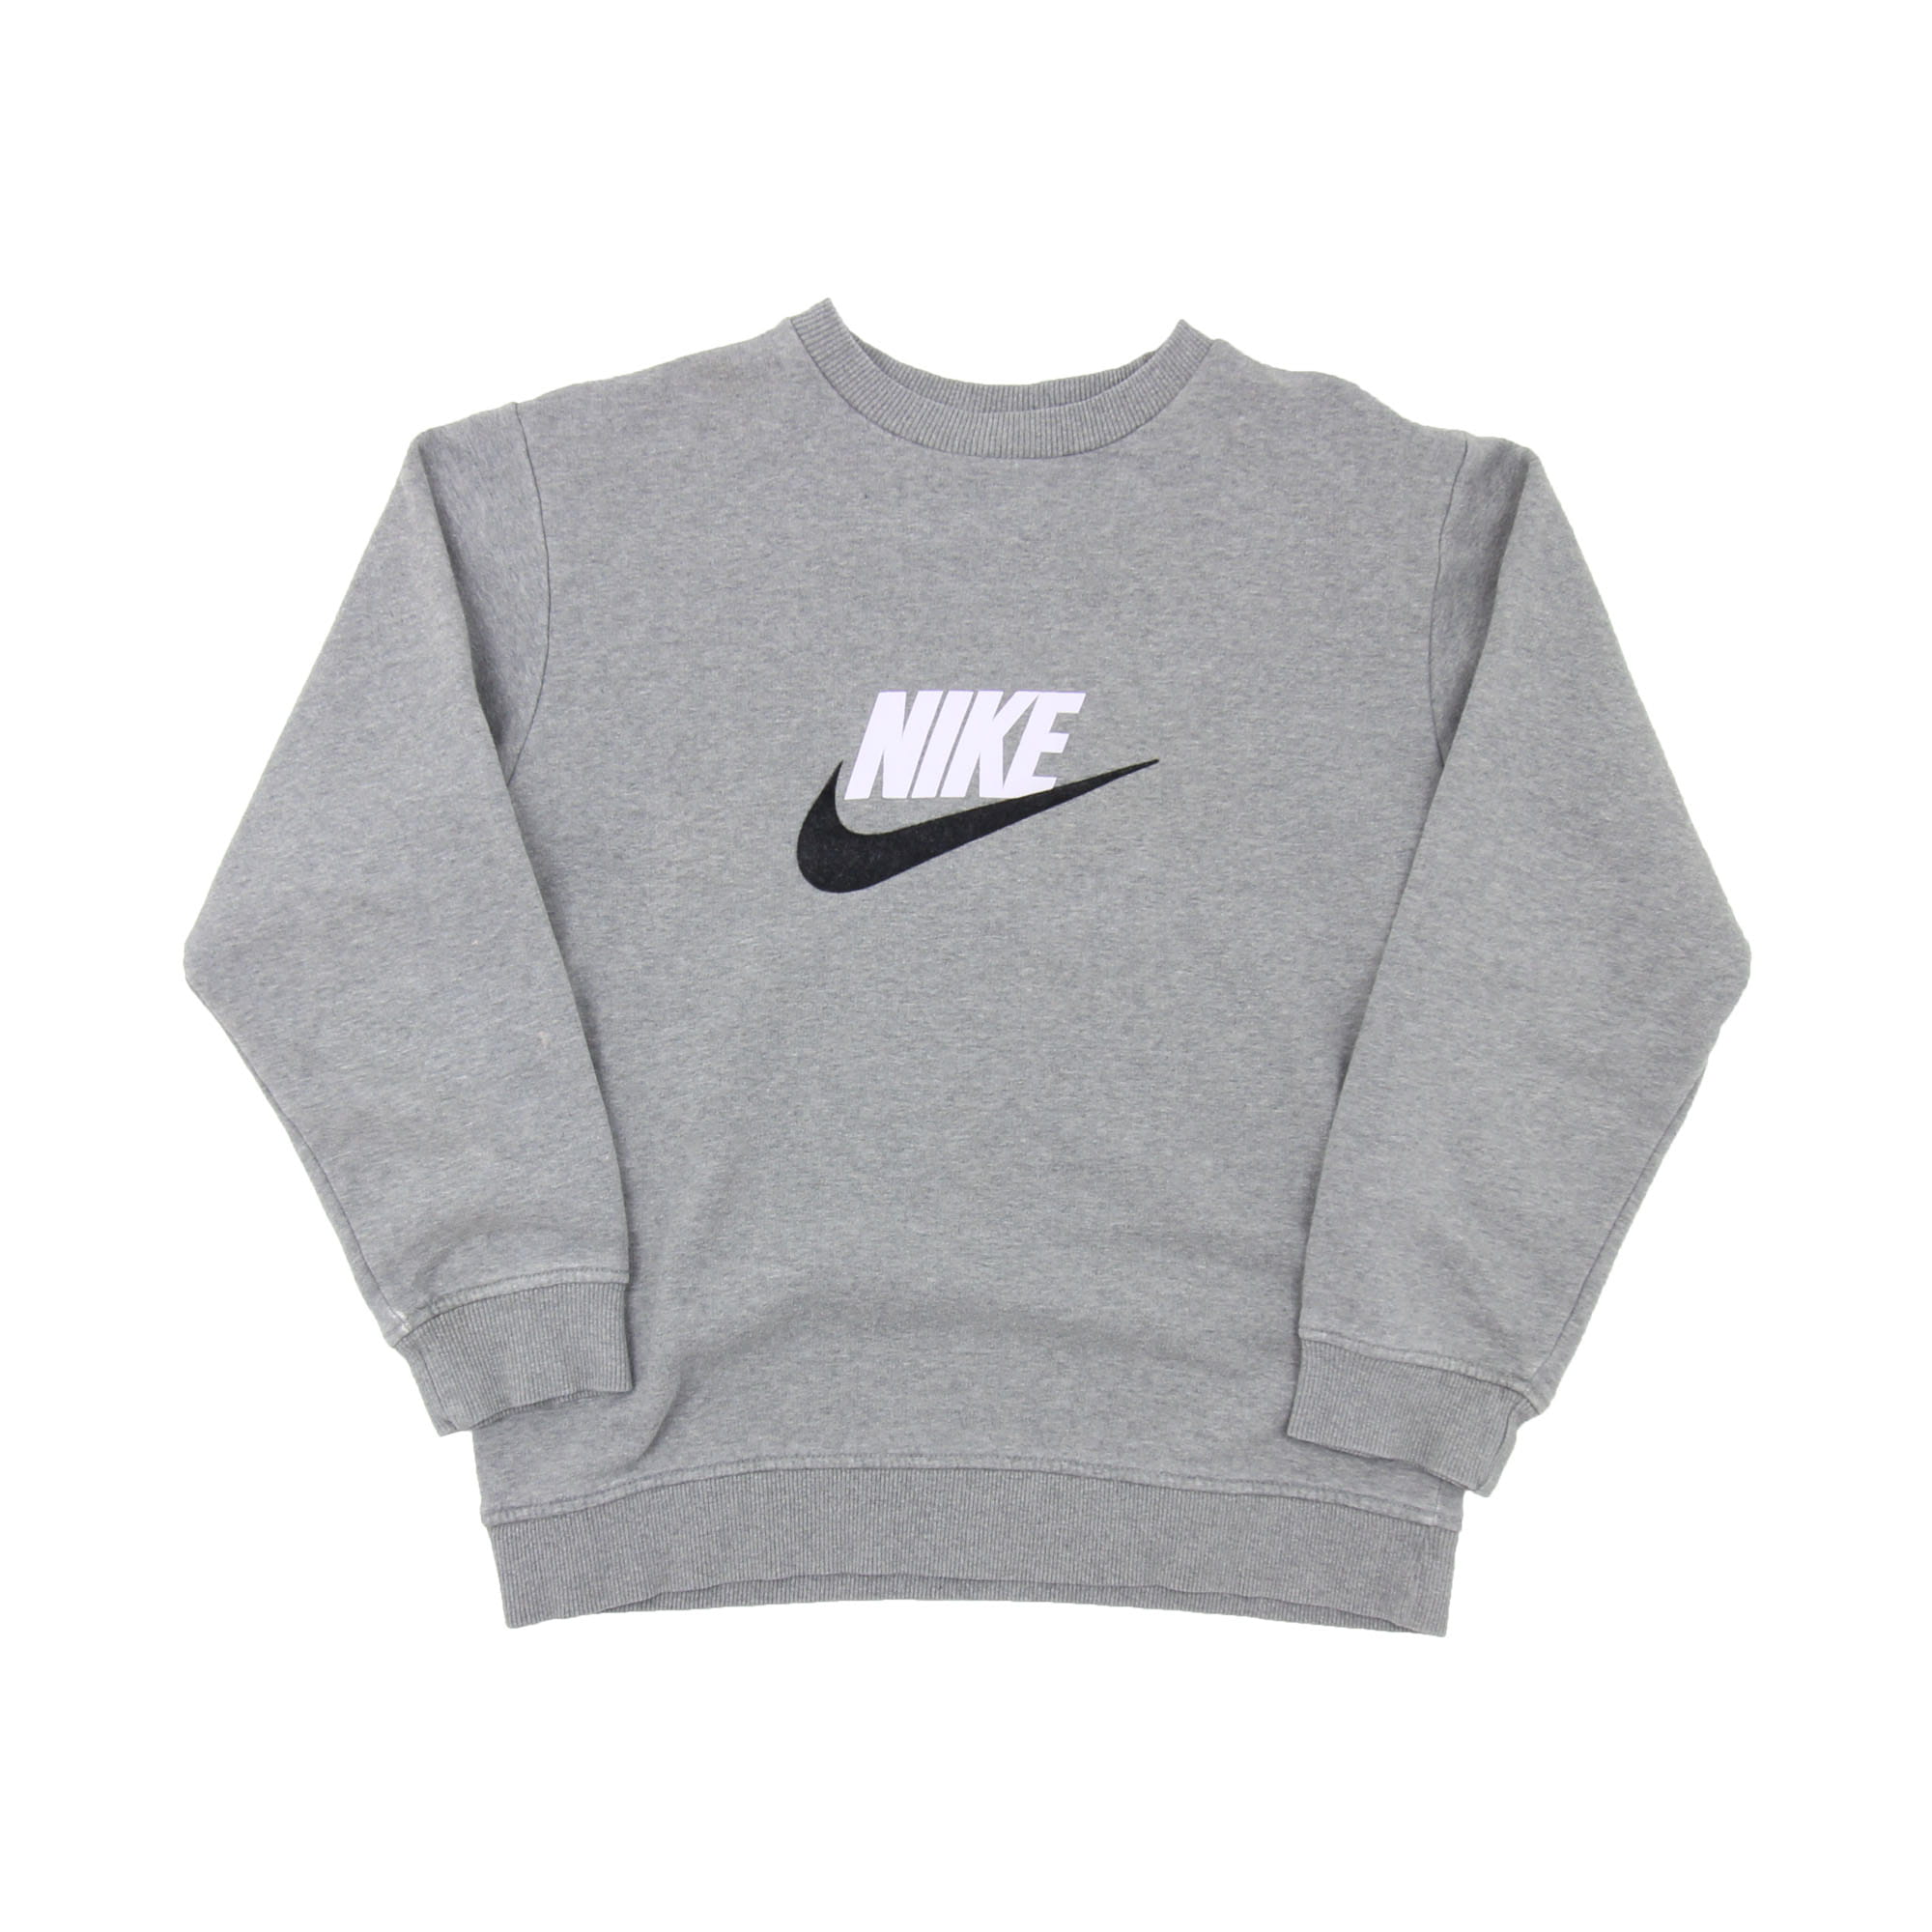 Nike Vintage Sweatshirt -  S